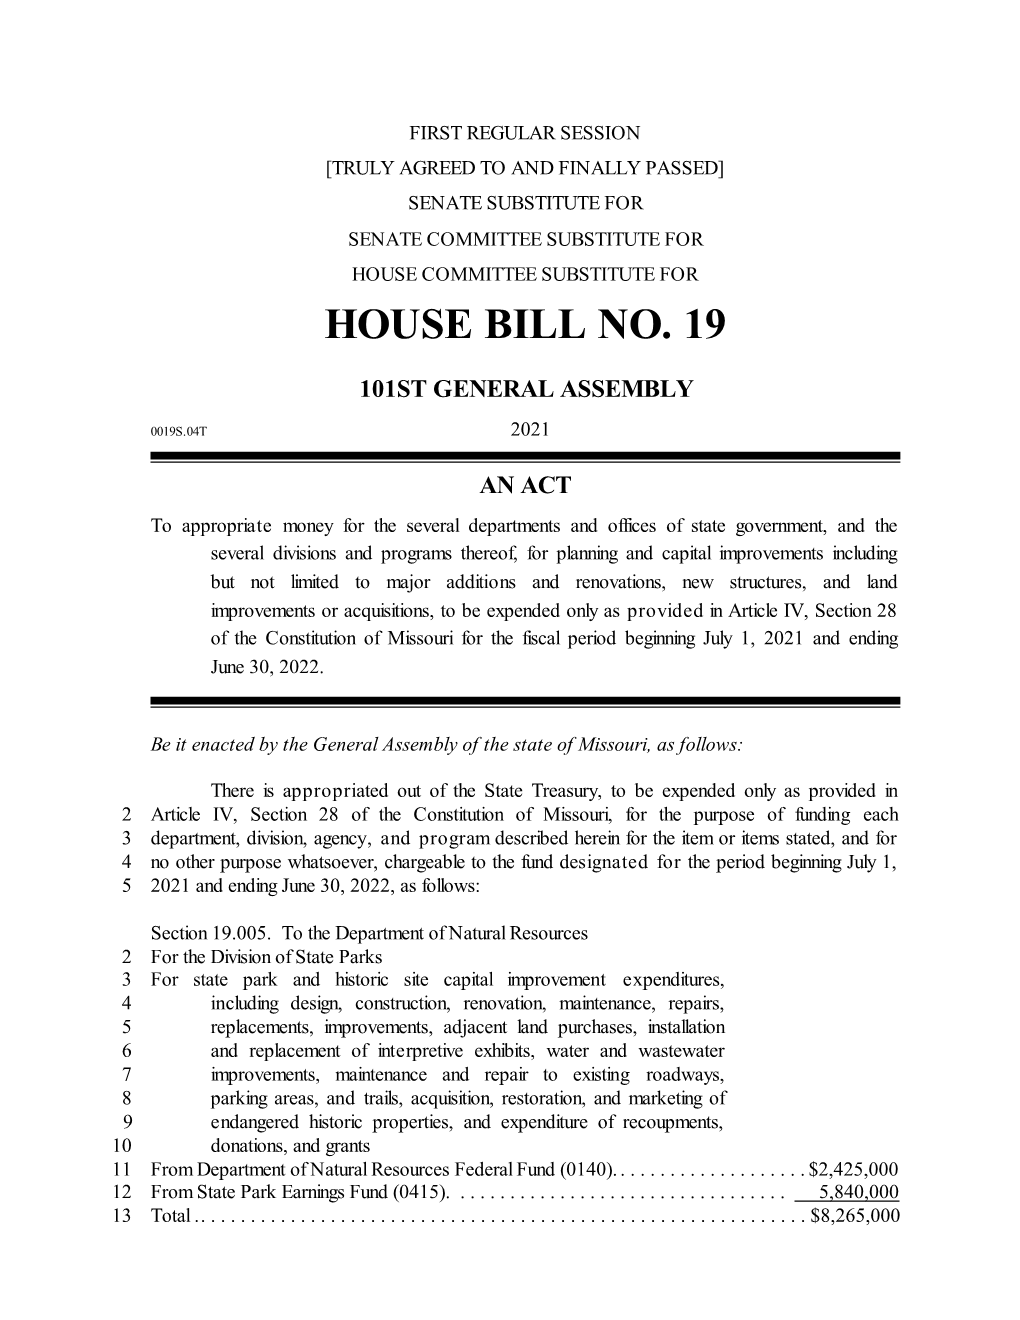 House Bill No. 19